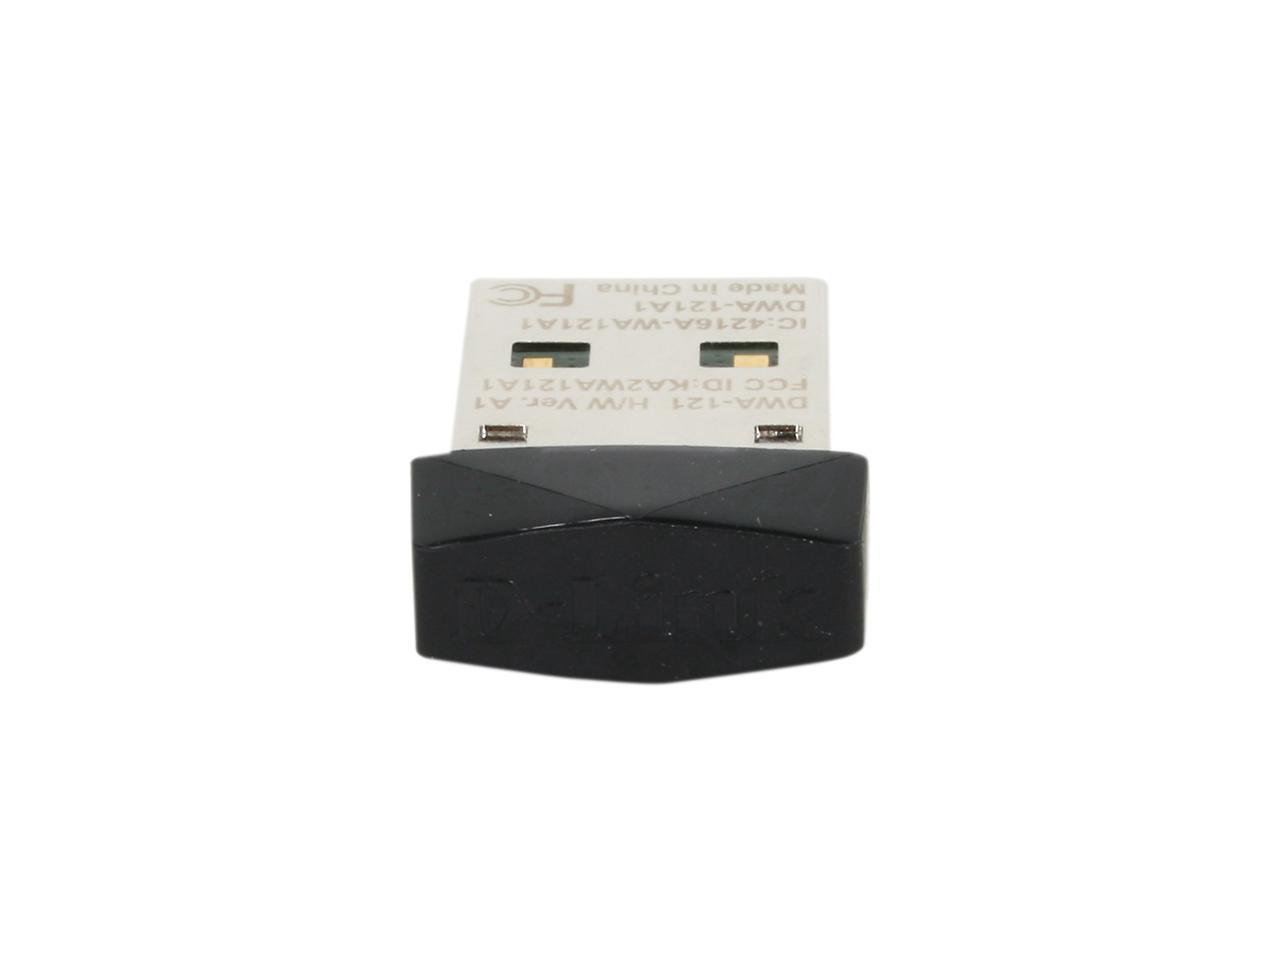 D-Link Wireless N150 Pico USB Adapter (DWA-121)